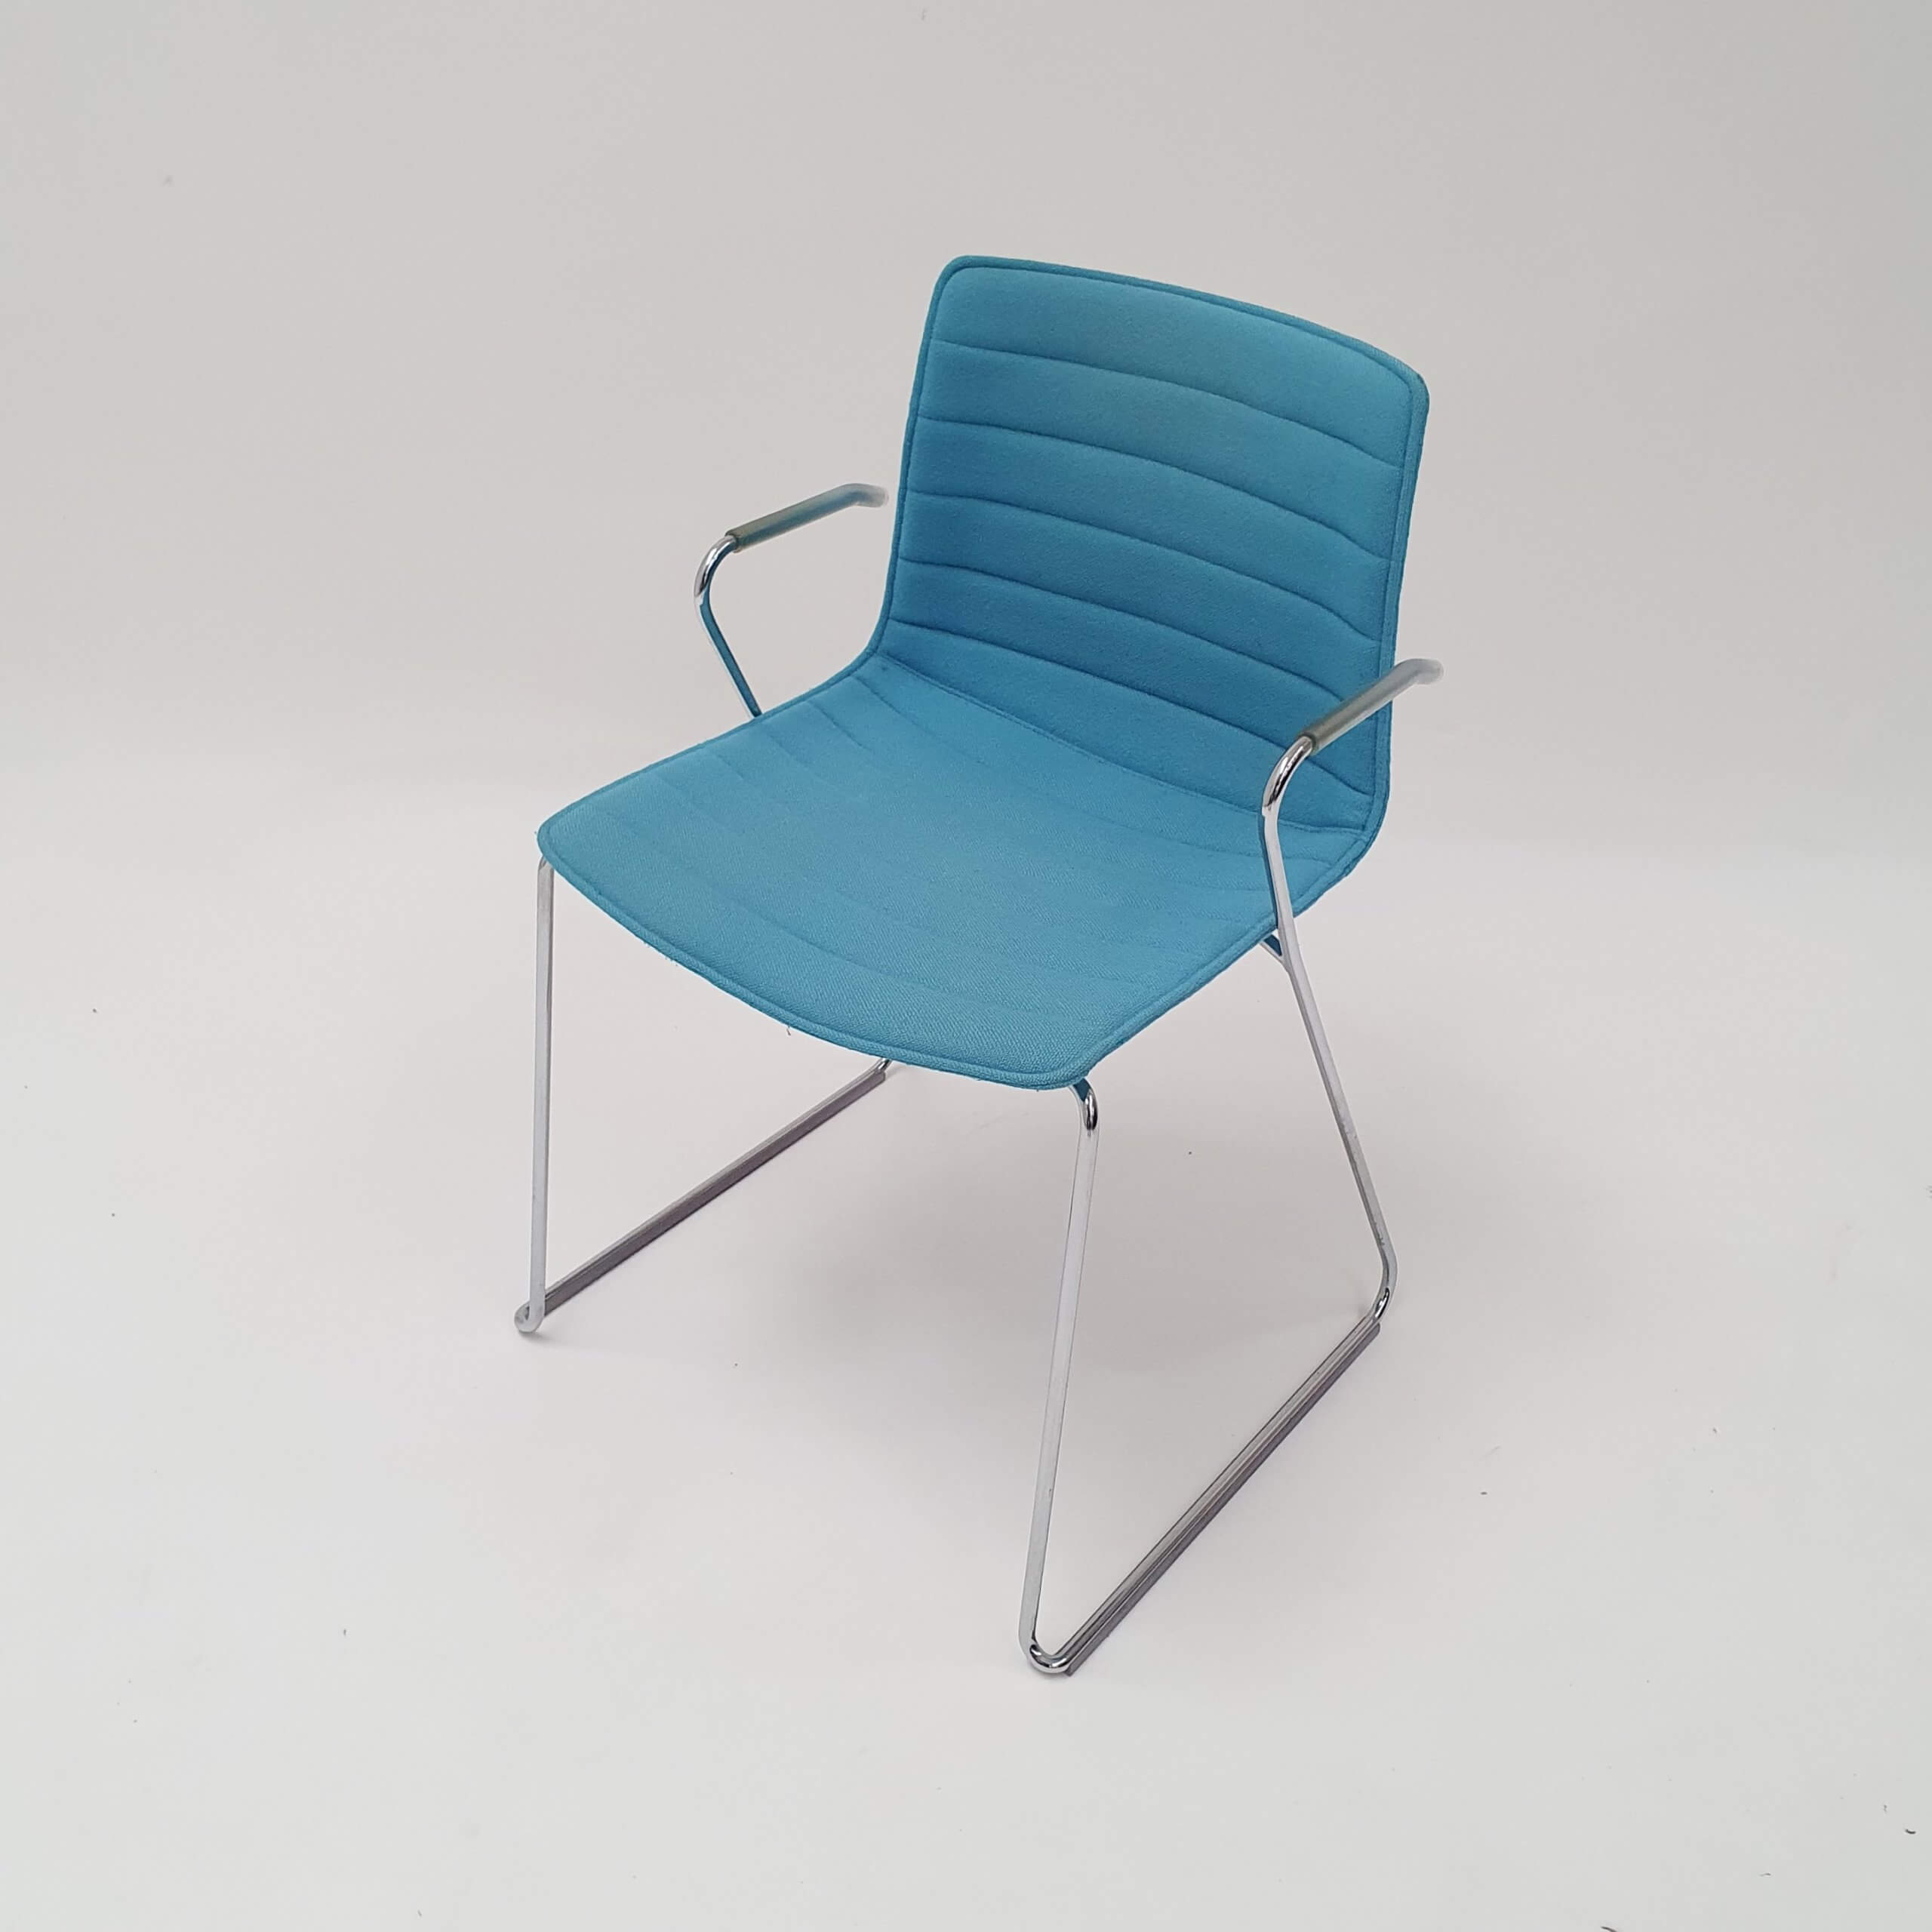 site verkoper kroon Arper Catifa stoel (met armleuning) gebruikt #11564 - Infra kantoormeubilair